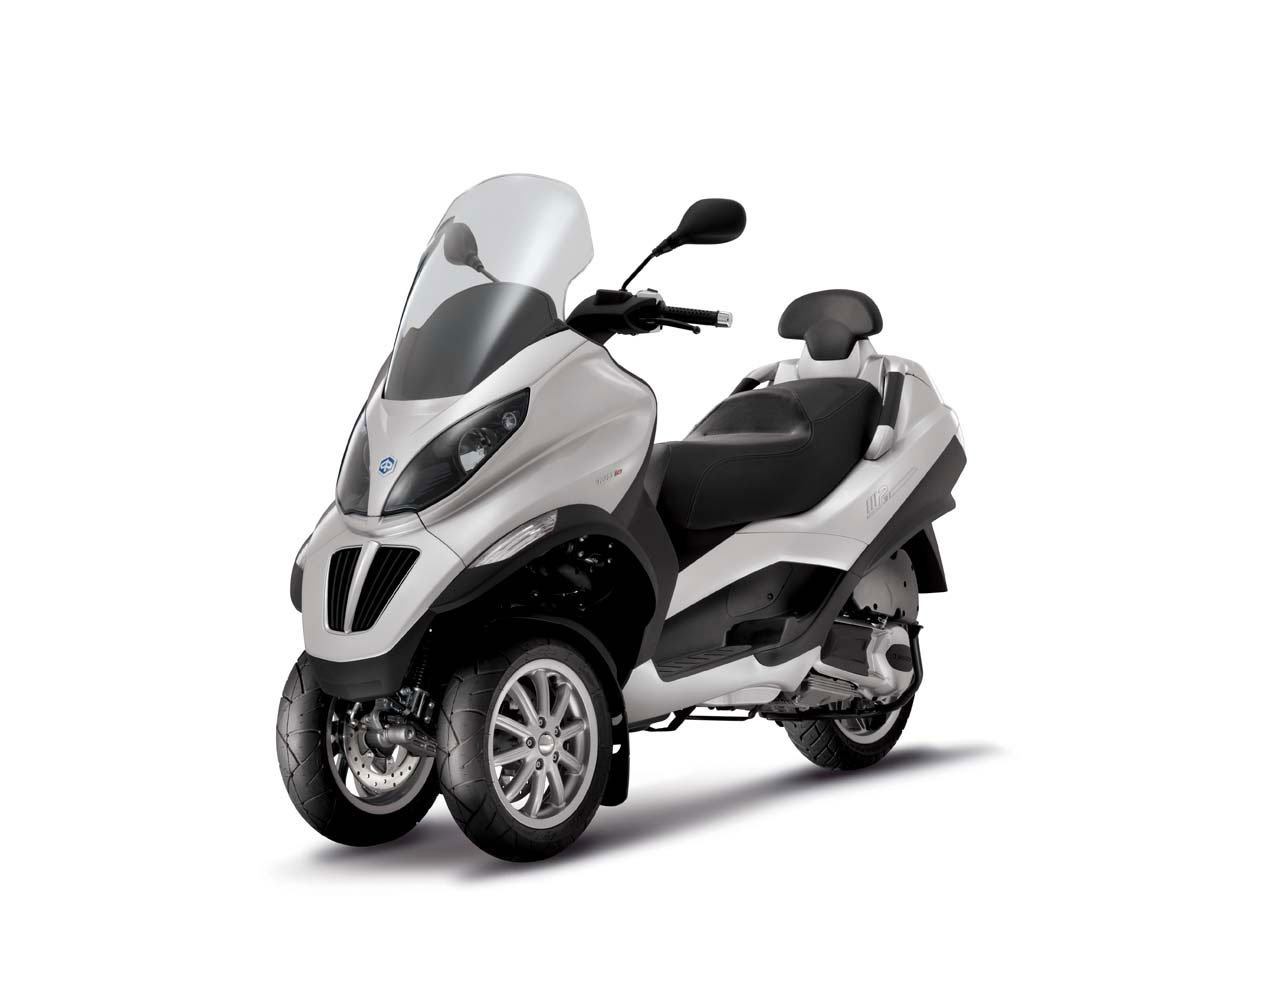 Listino Piaggio Beverly Sport Touring 350 ie Scooter oltre 300 - image 15093_piaggio-mp3300-ie-lt on https://moto.motori.net